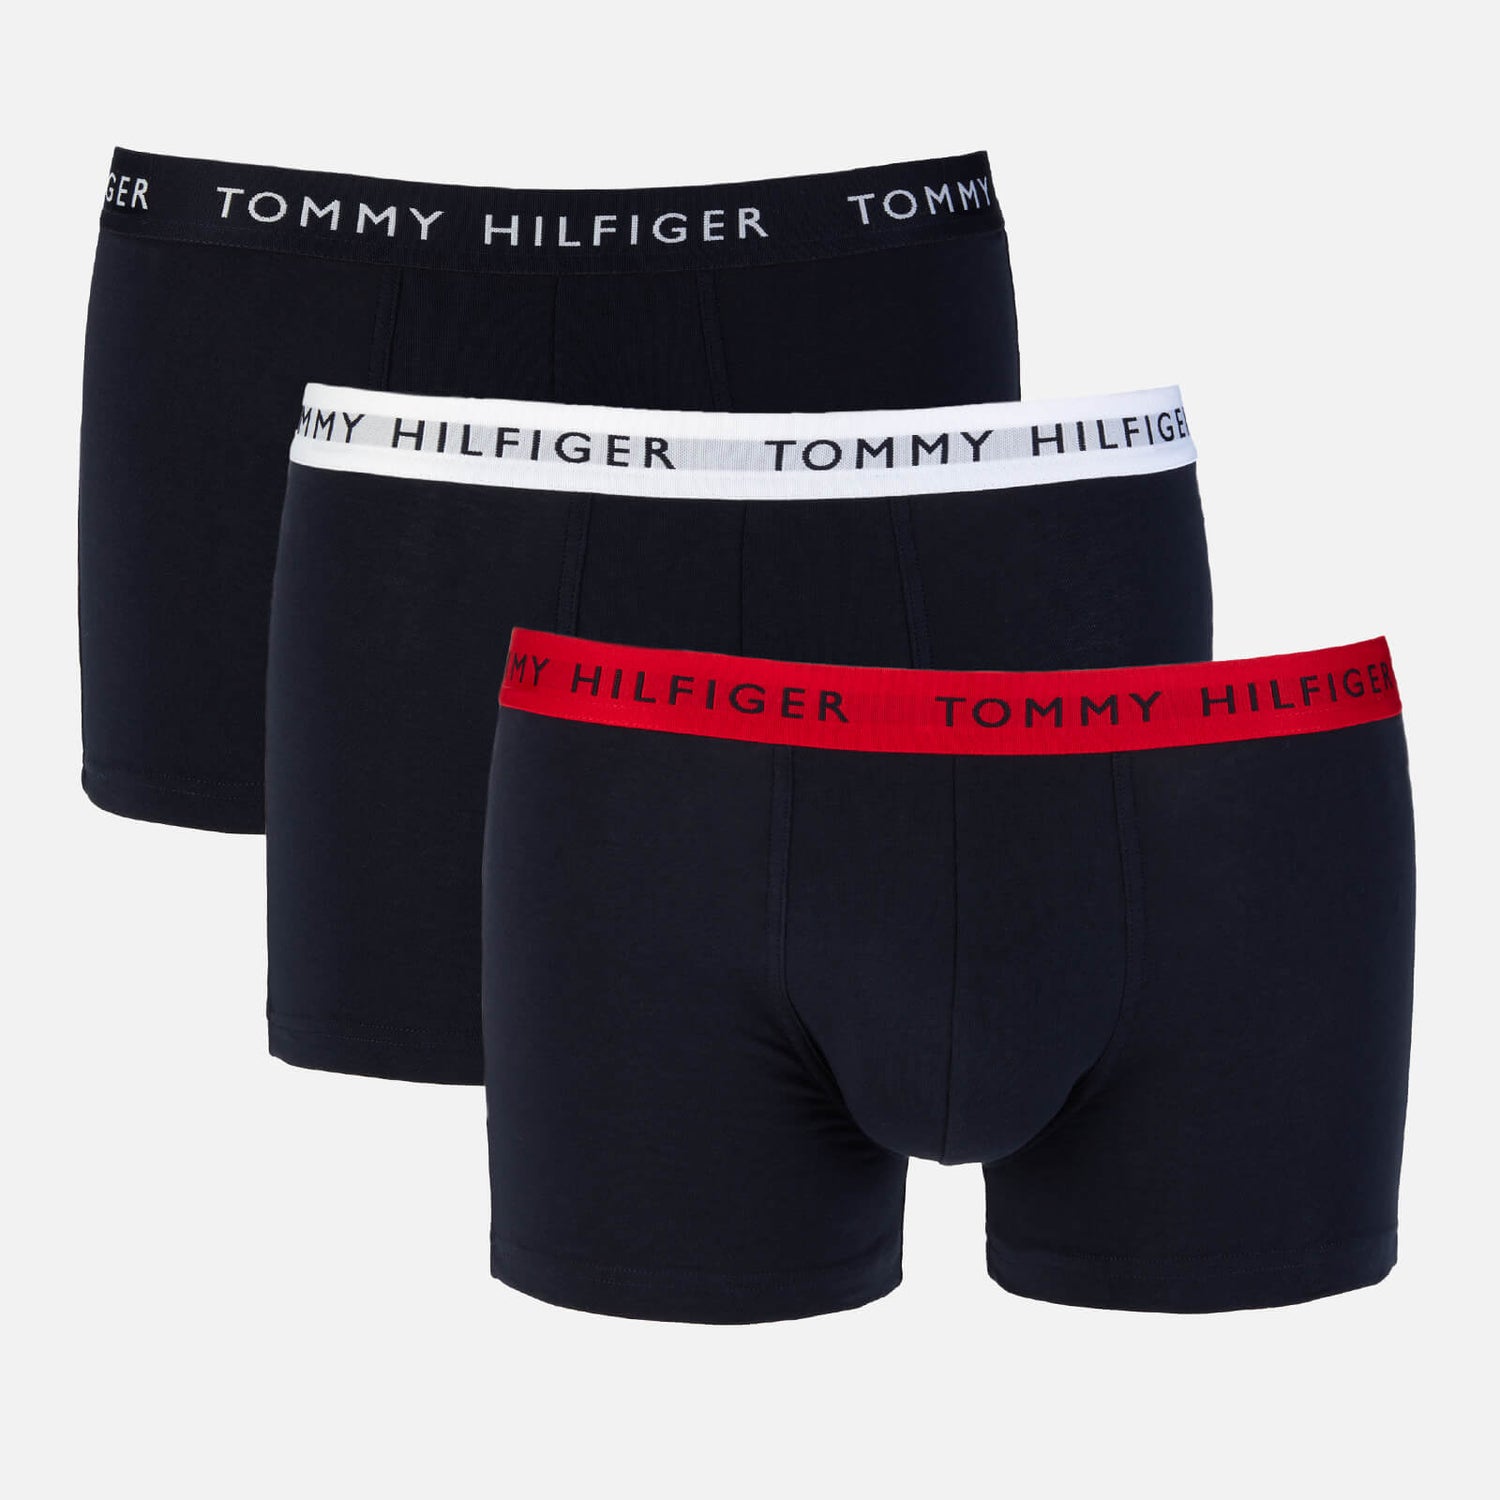 Tommy Hilfiger Men's 3-Pack Contrast Waistband Trunks - Desert Sky/White/Primary Red - S